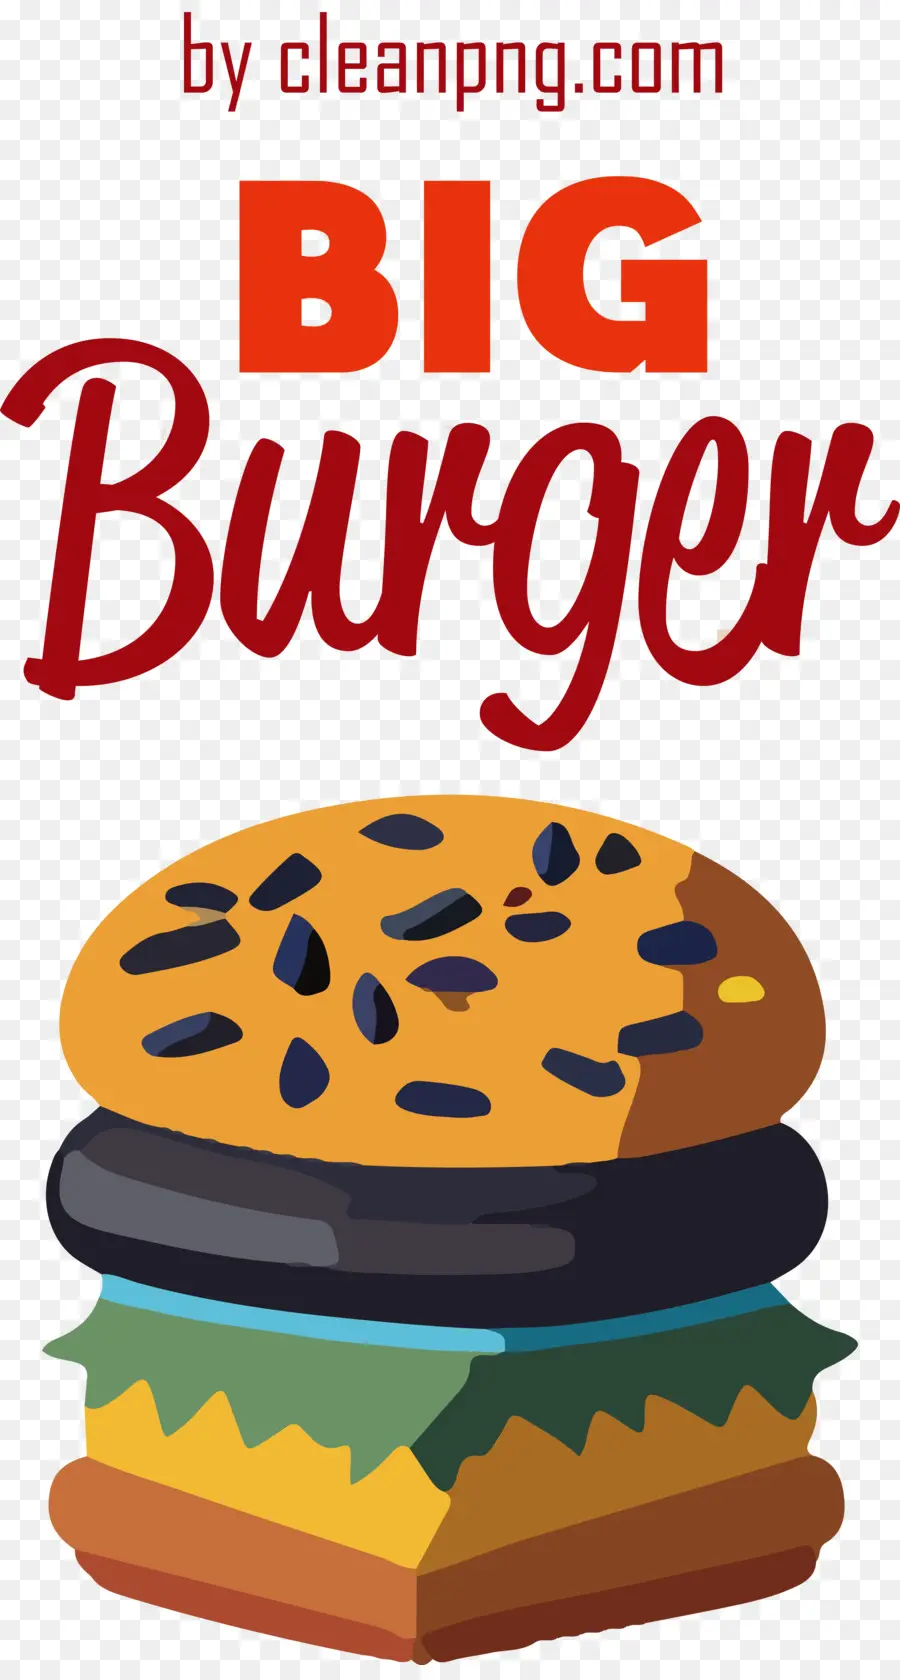 big burger internationale burger day fast food